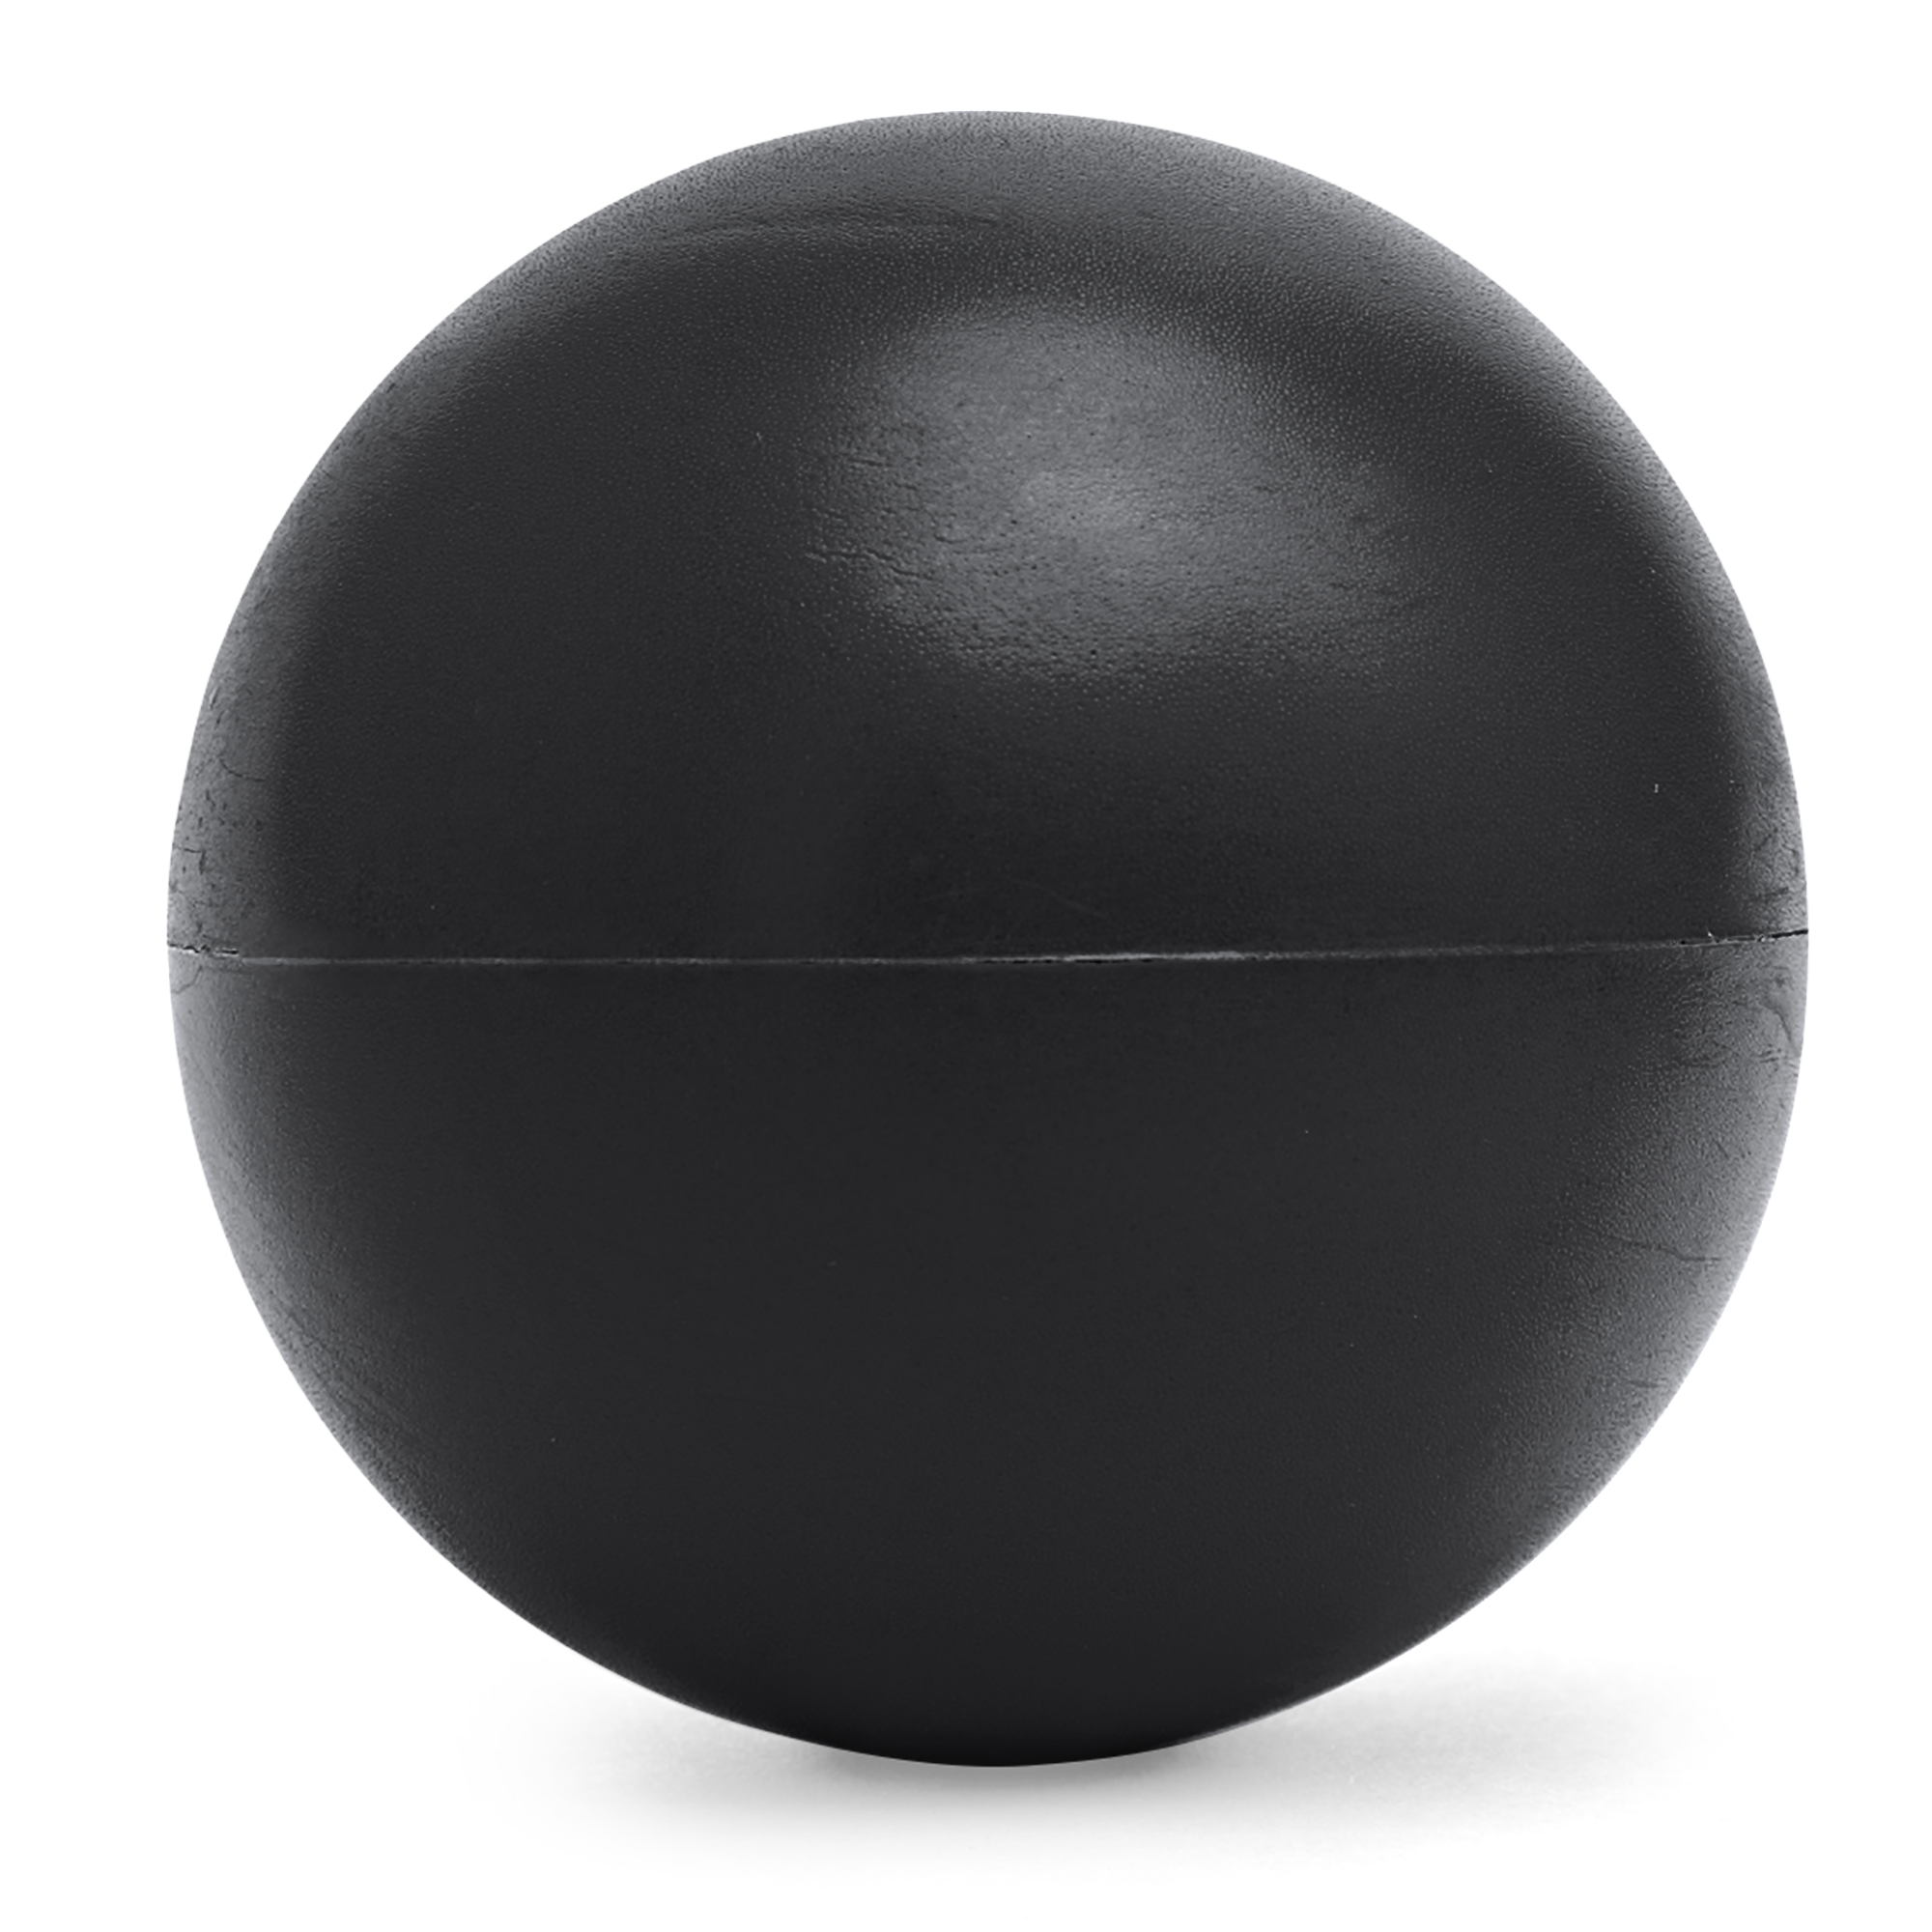 2642-ball-palla-antistress-in-tinta-unita-nero.jpg